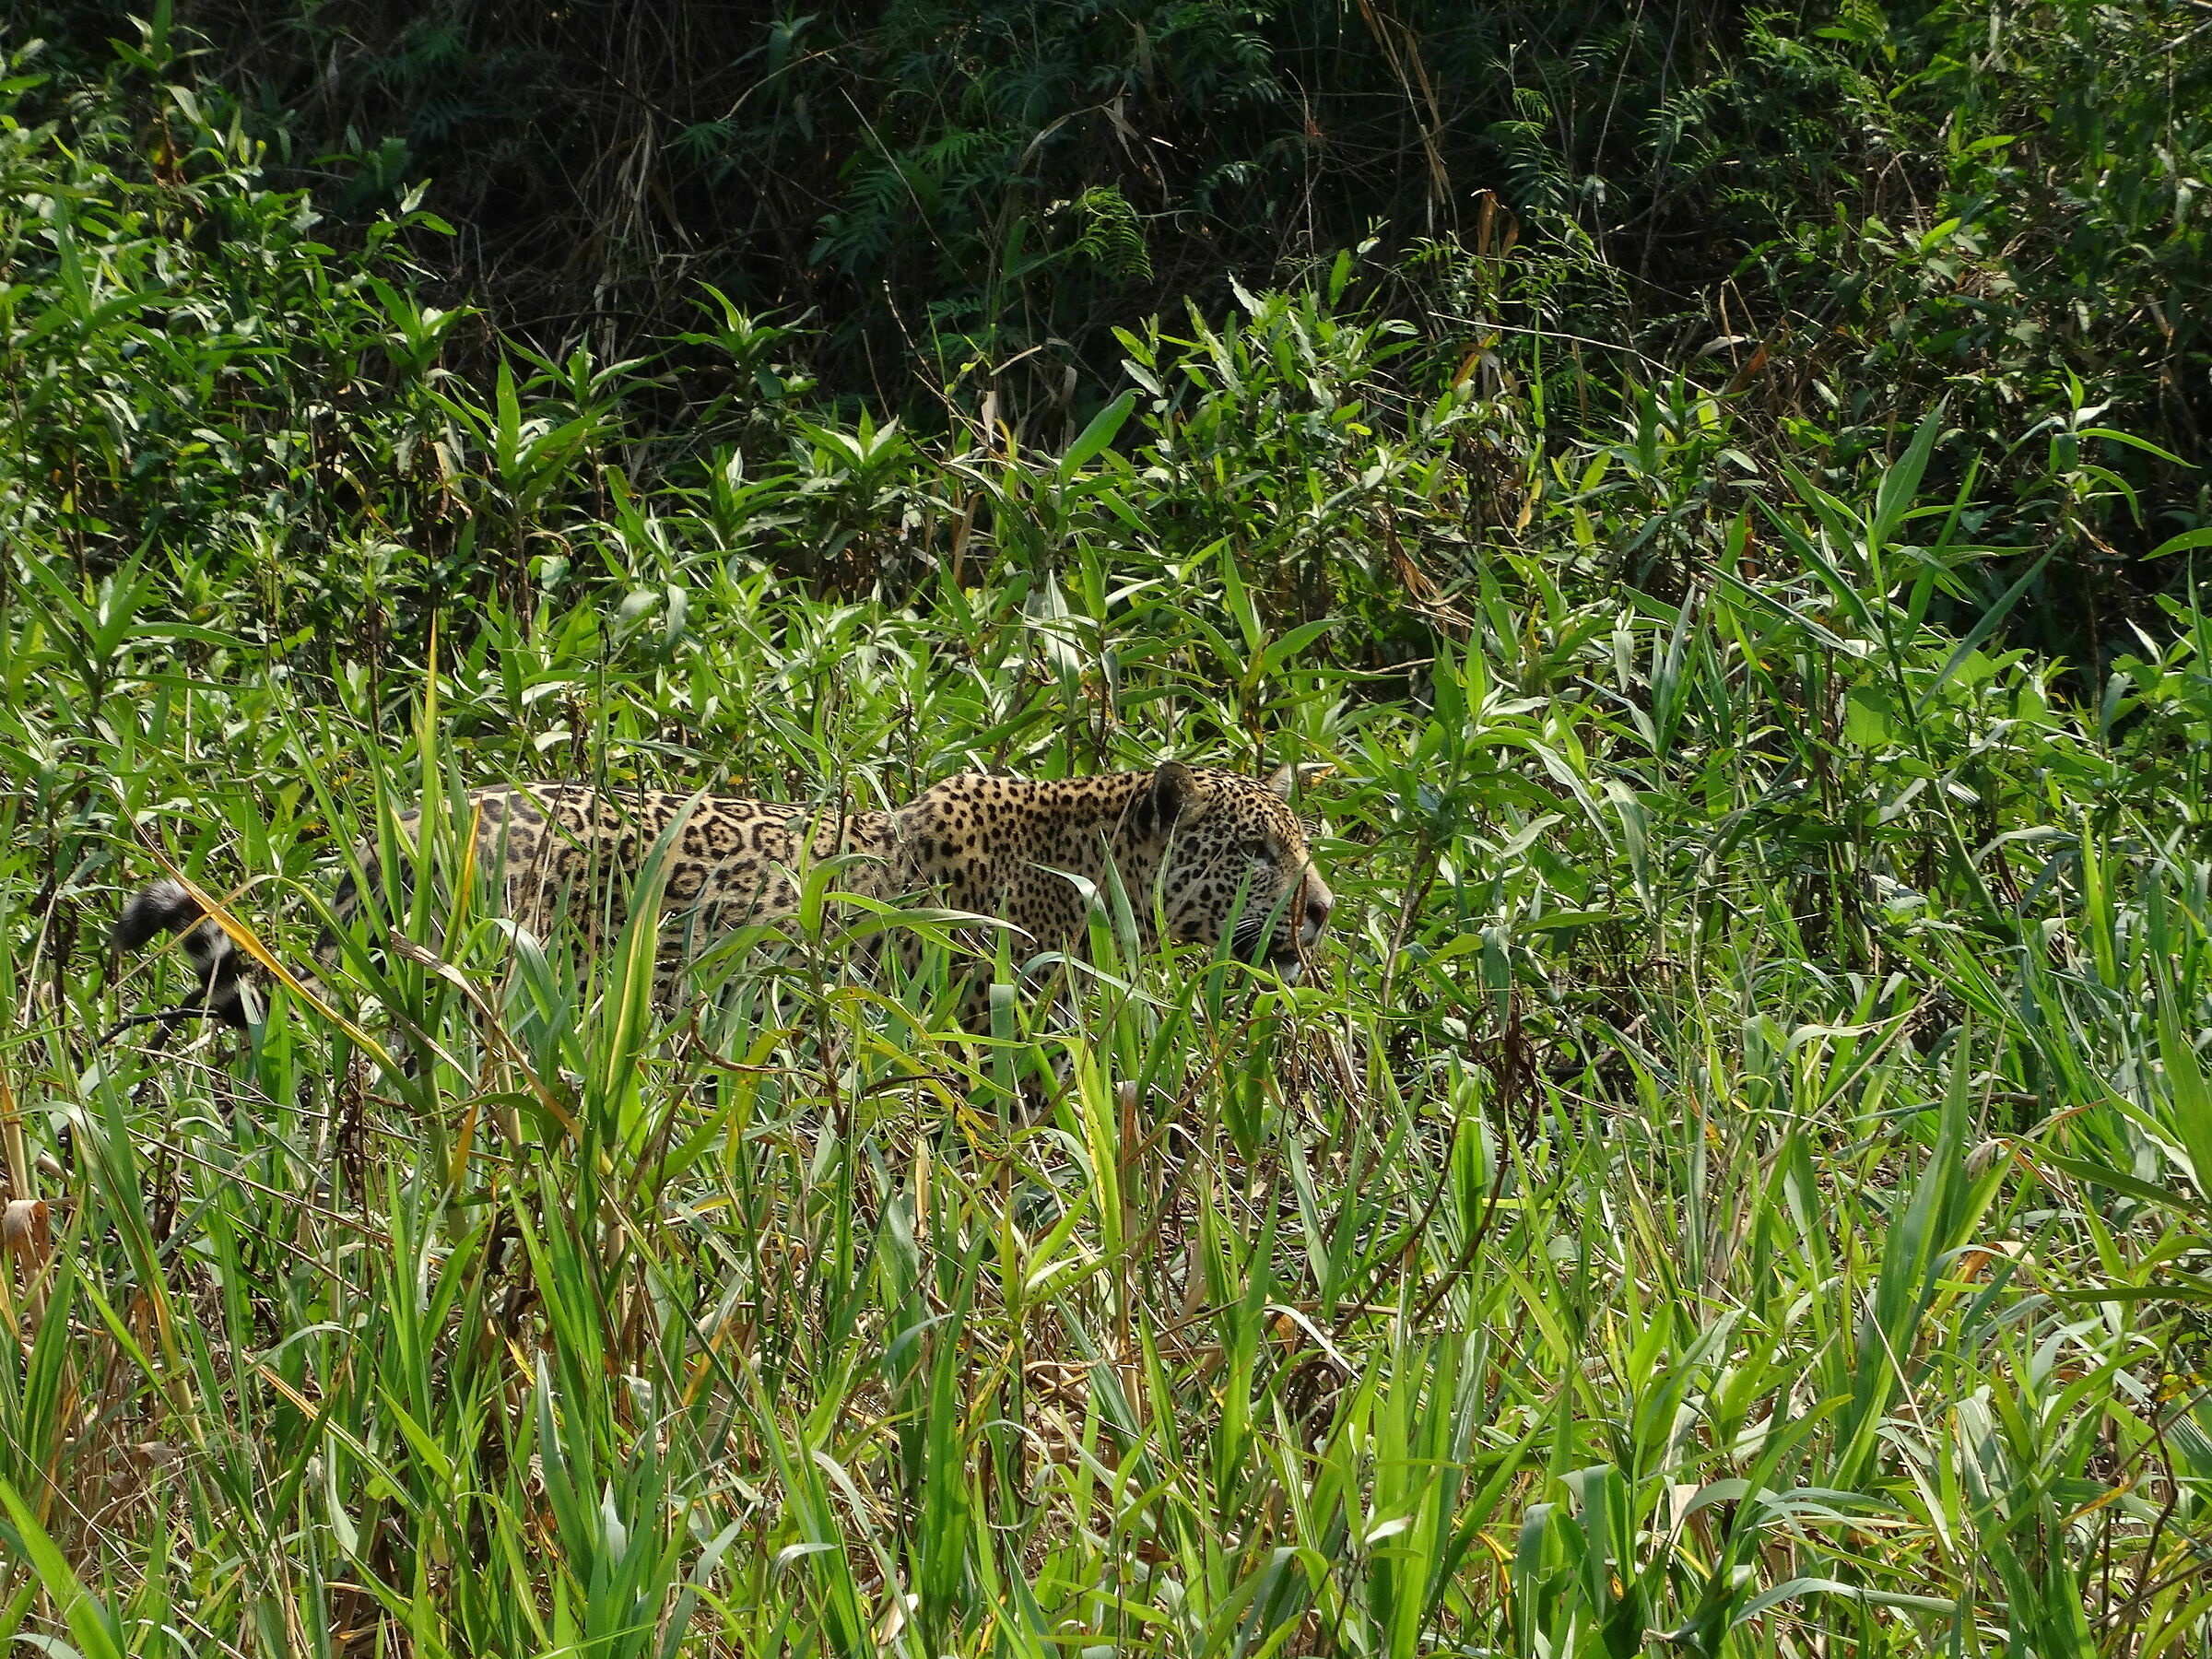 giaguaro in avvicinamento...